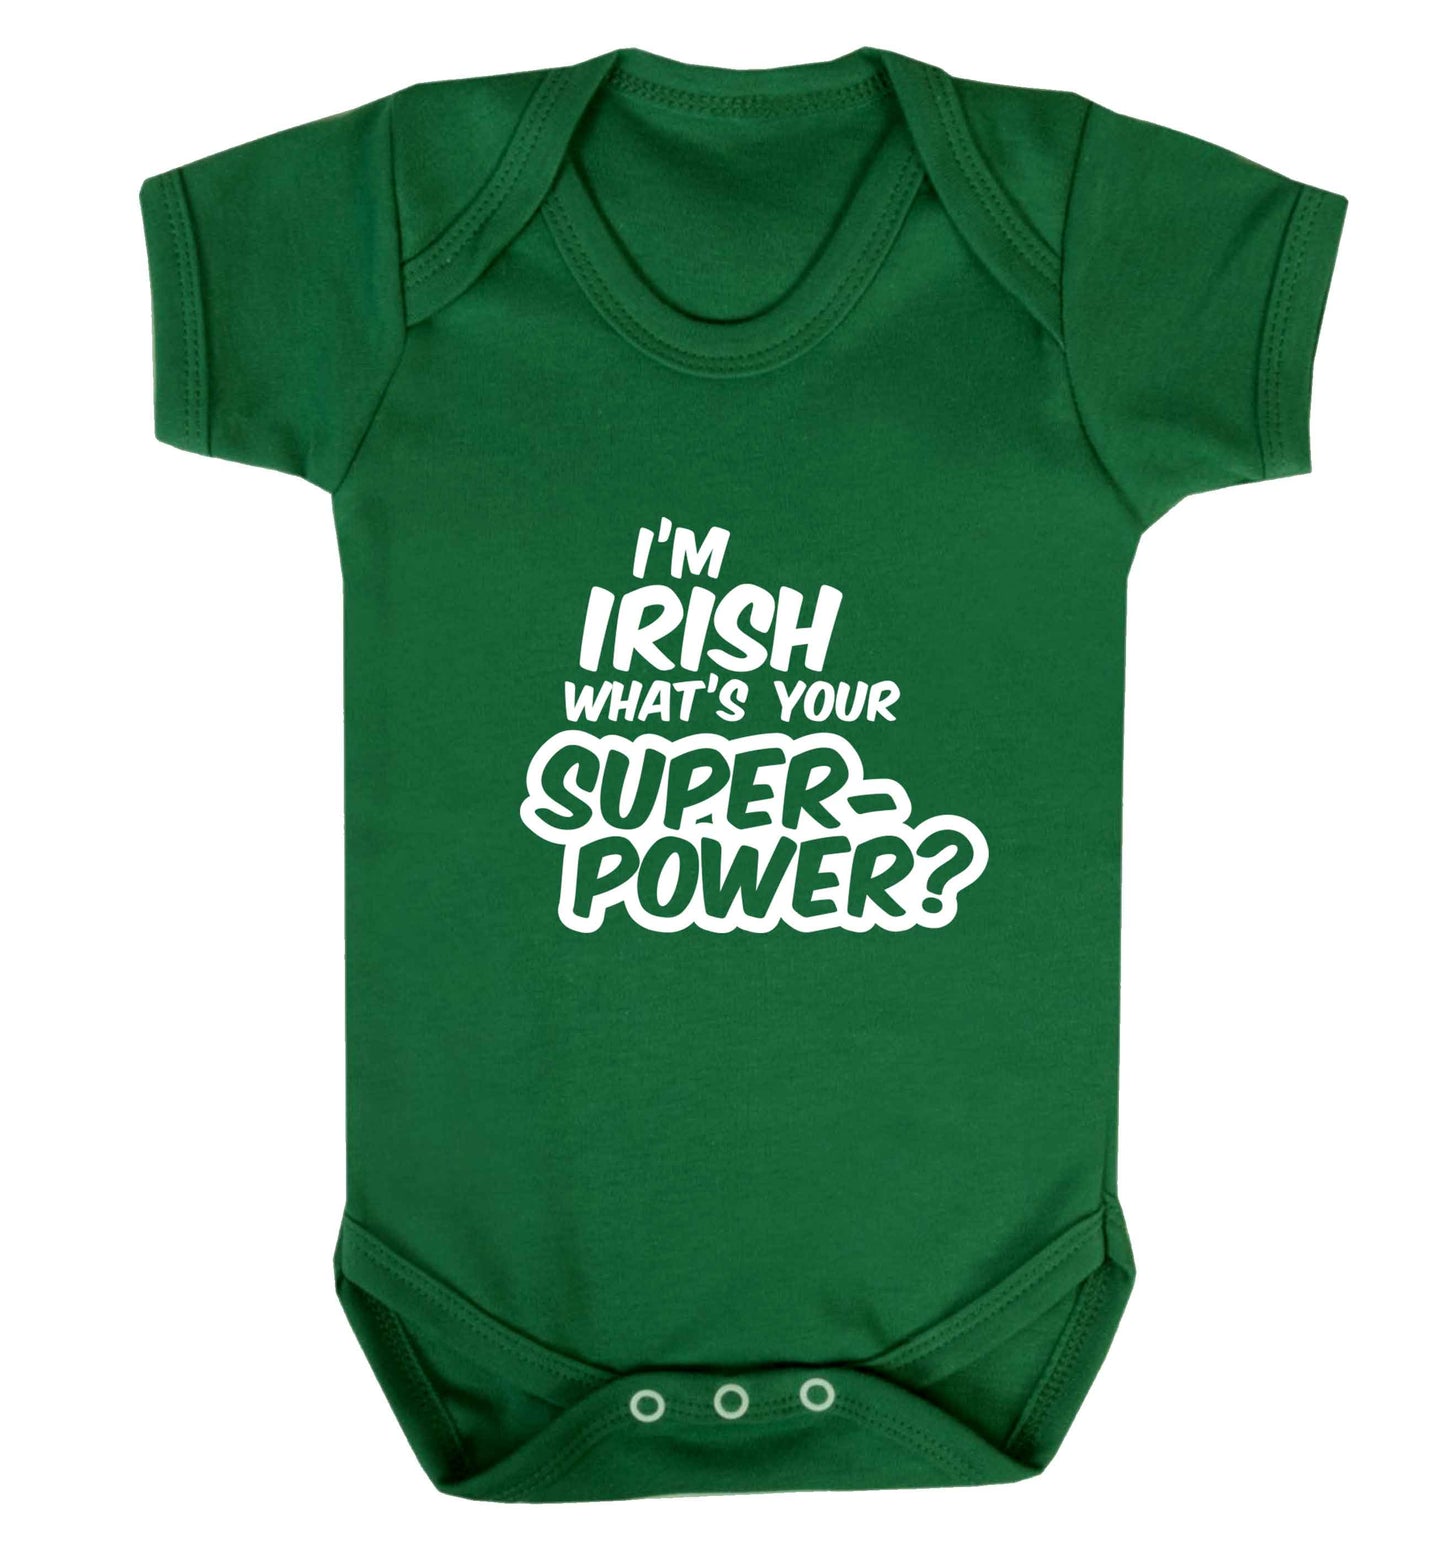 I'm Irish what's your superpower? baby vest green 18-24 months